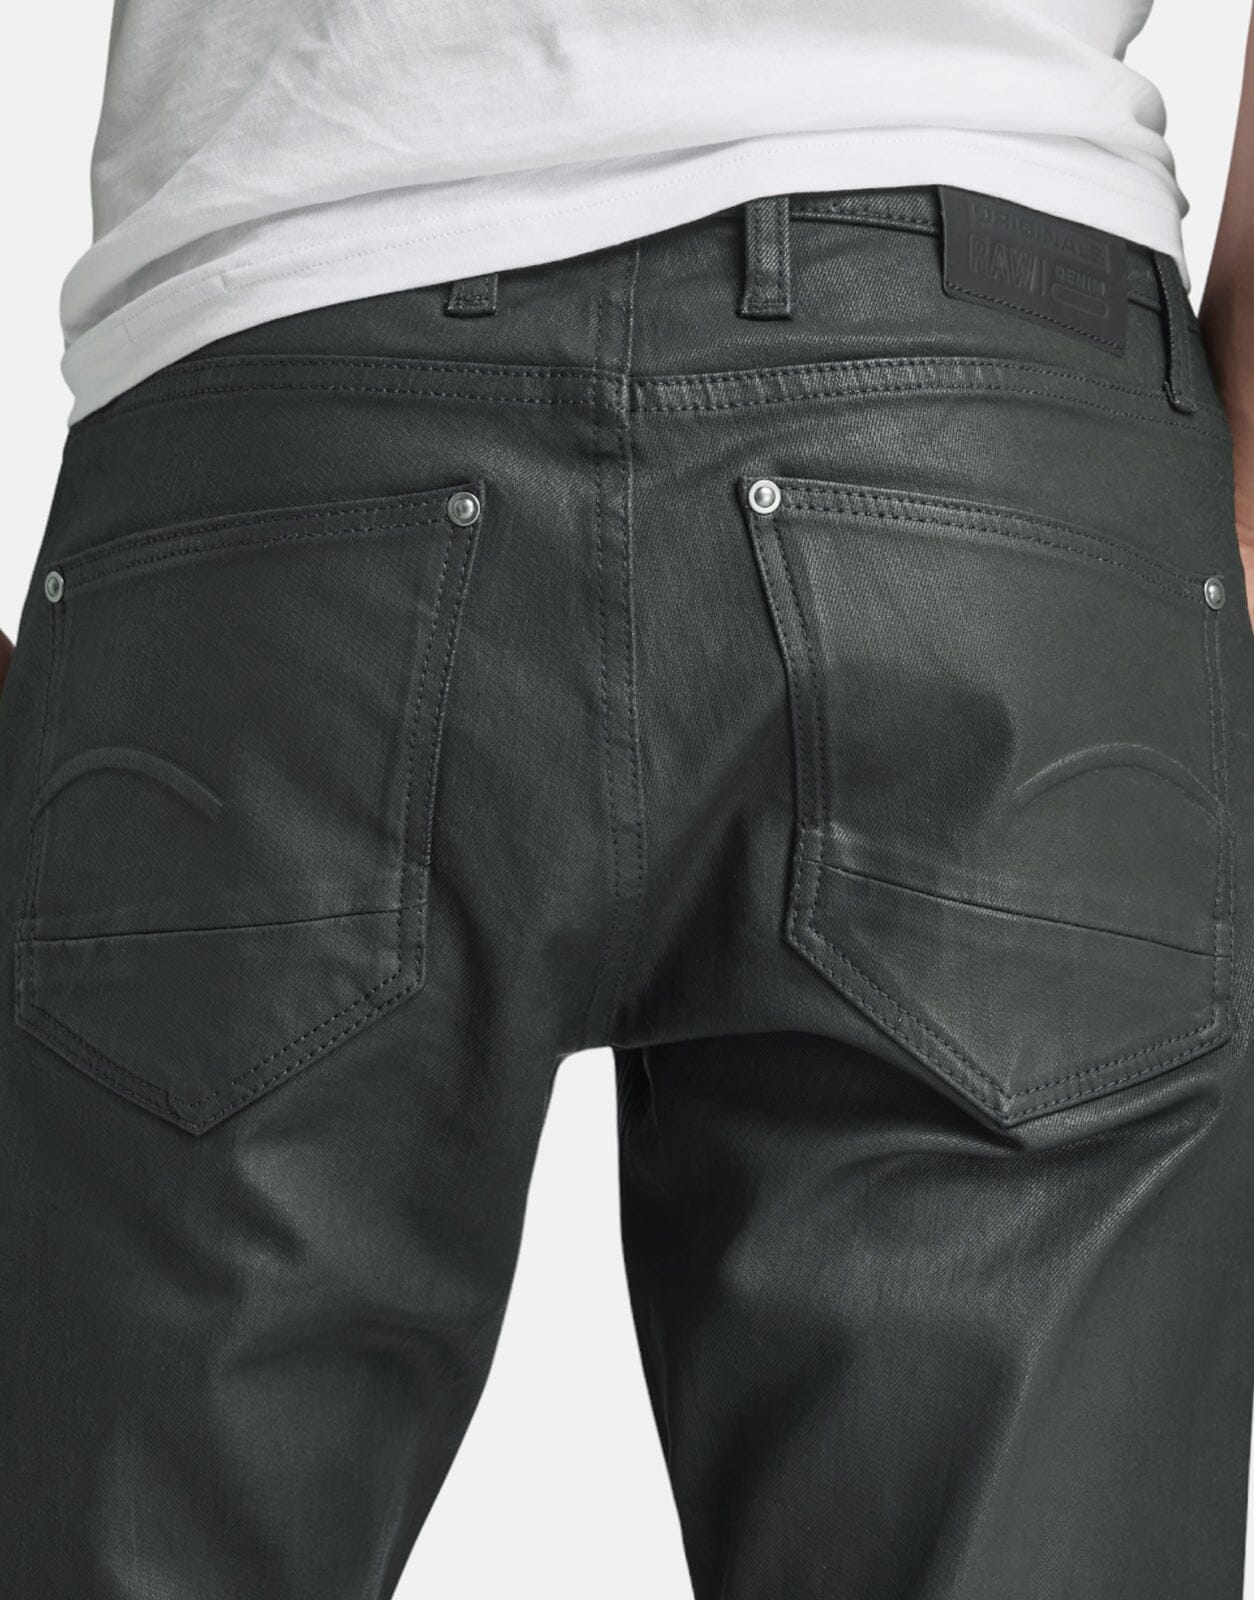 G-Star RAW Revend FWD Skinny Wax Coated Jeans - Subwear